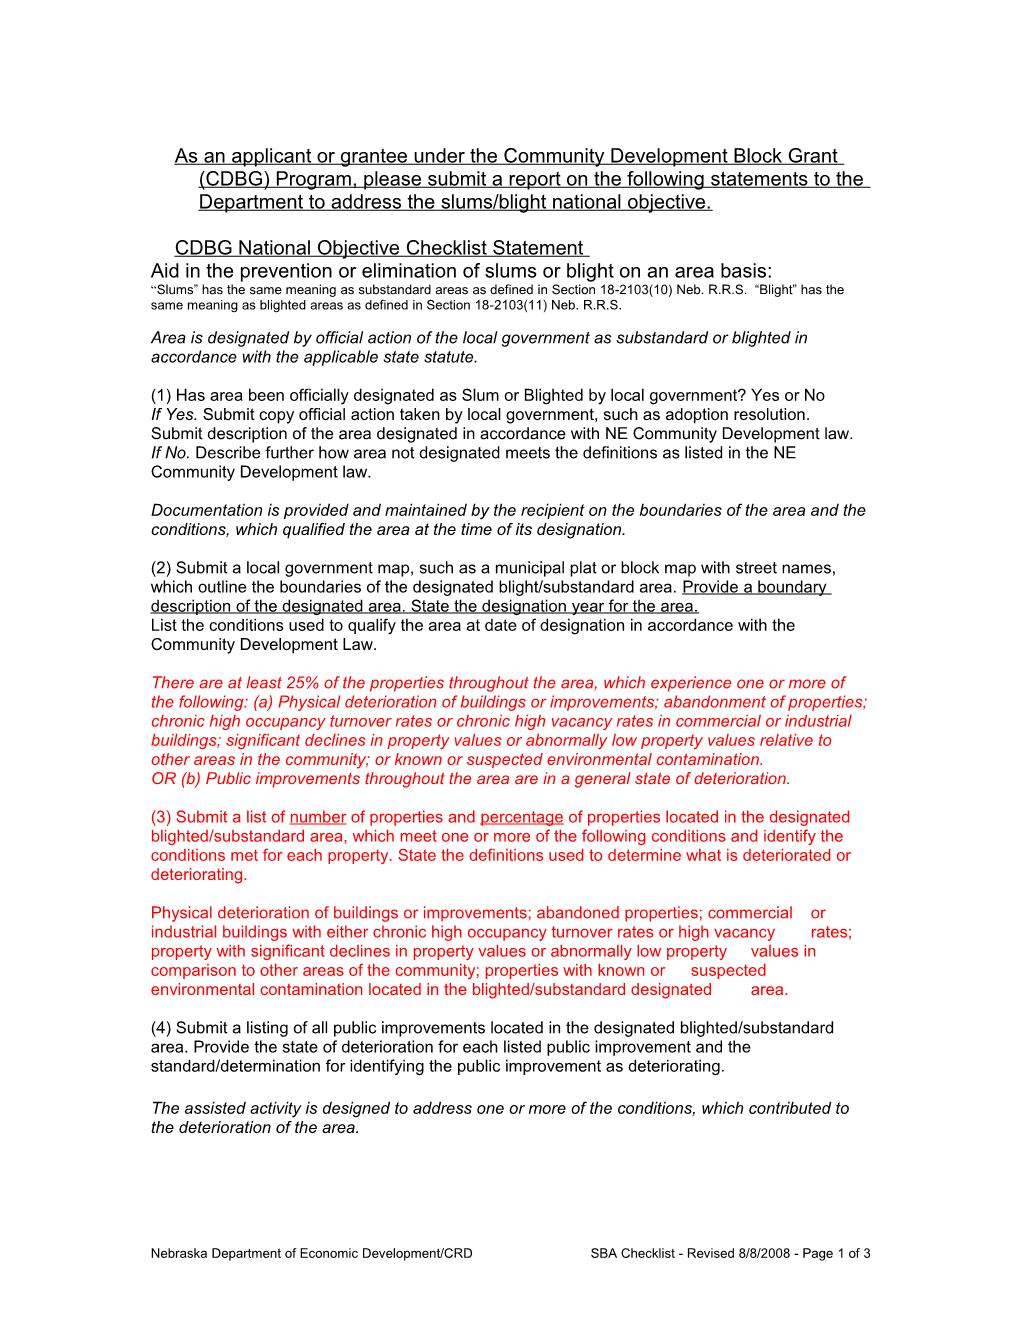 Checklist for SBA-Revised 8/8/2008